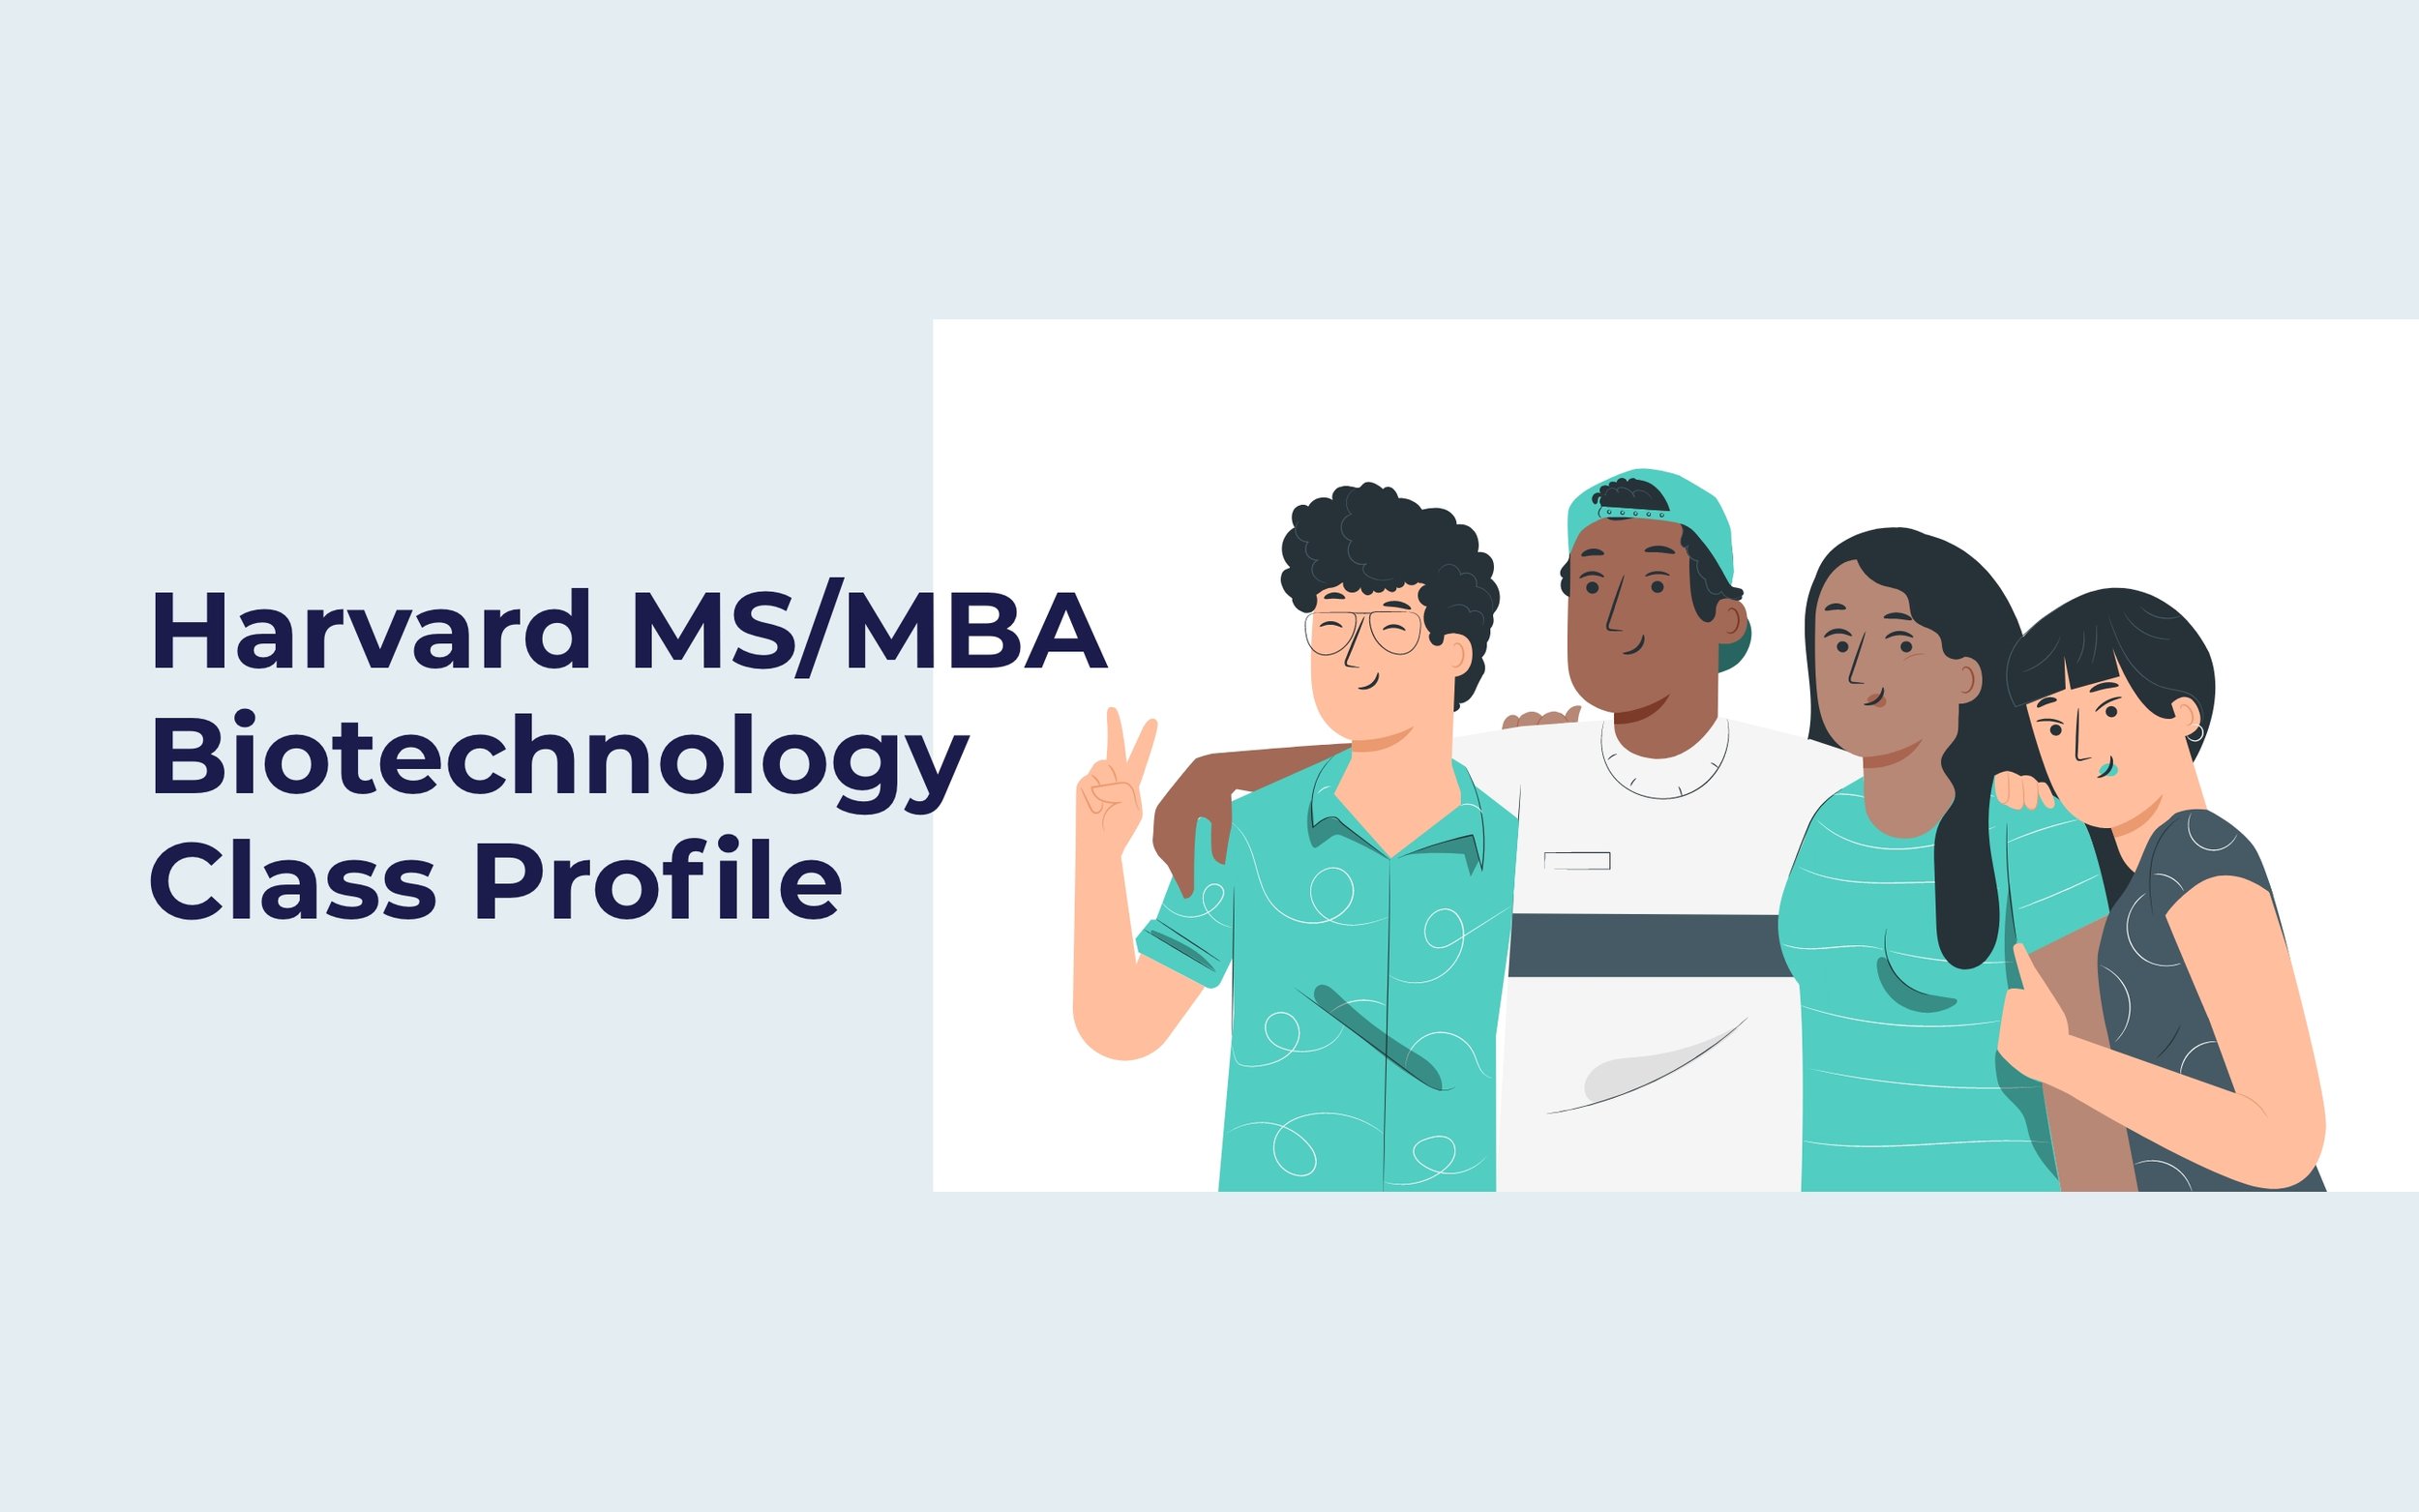 Harvard’s MS/MBA Biotechnology program — MBA and Beyond